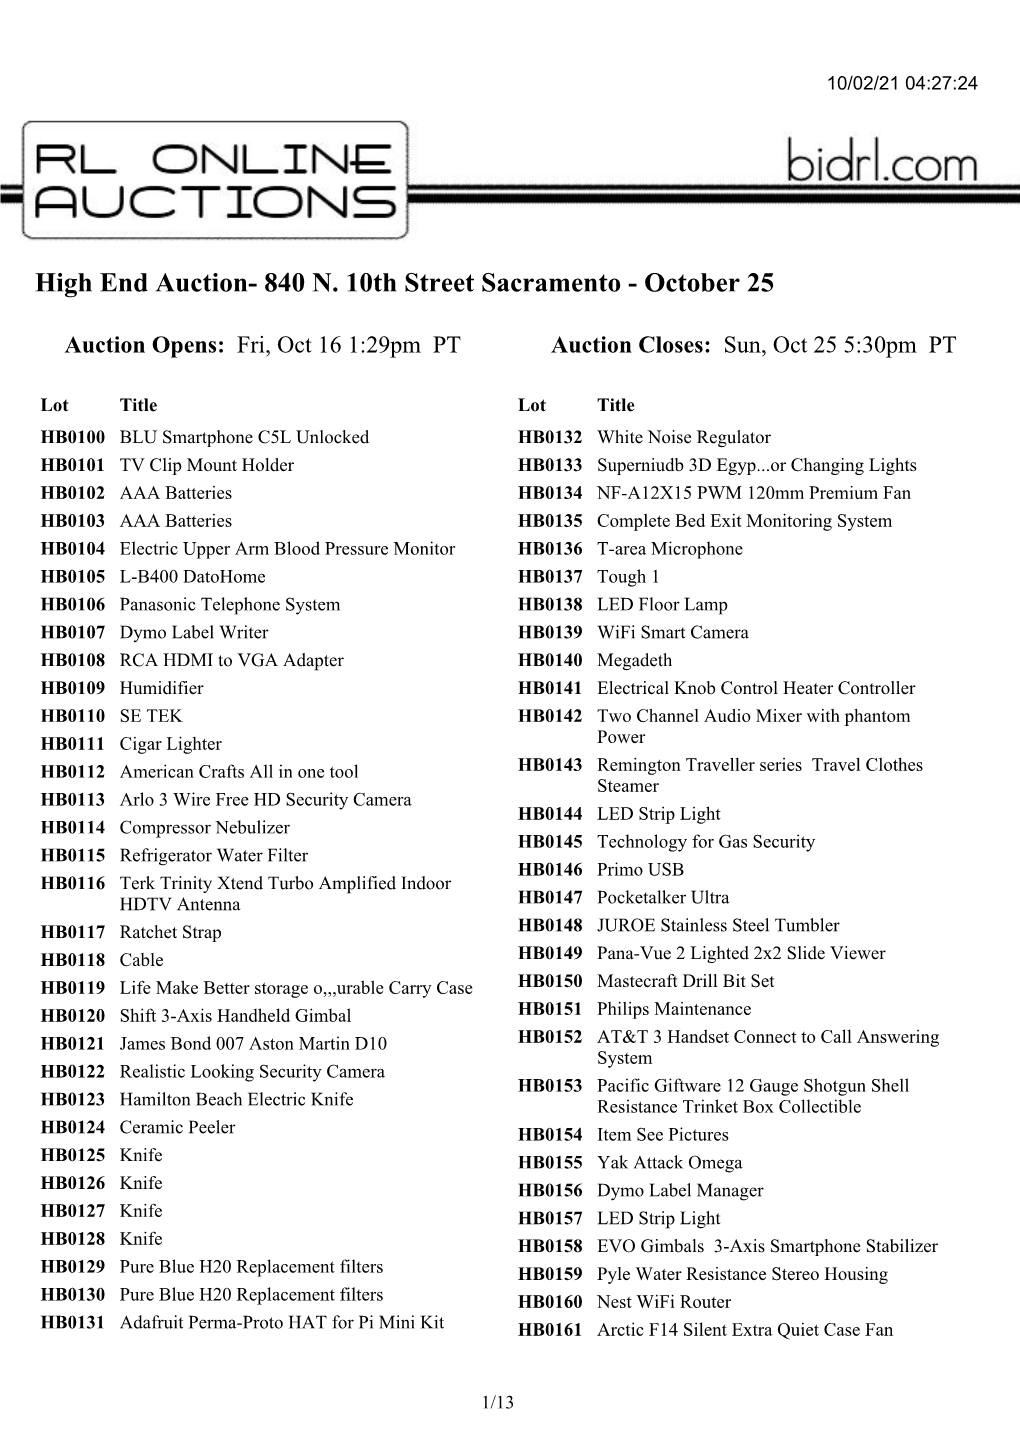 High End Auction- 840 N. 10Th Street Sacramento - October 25